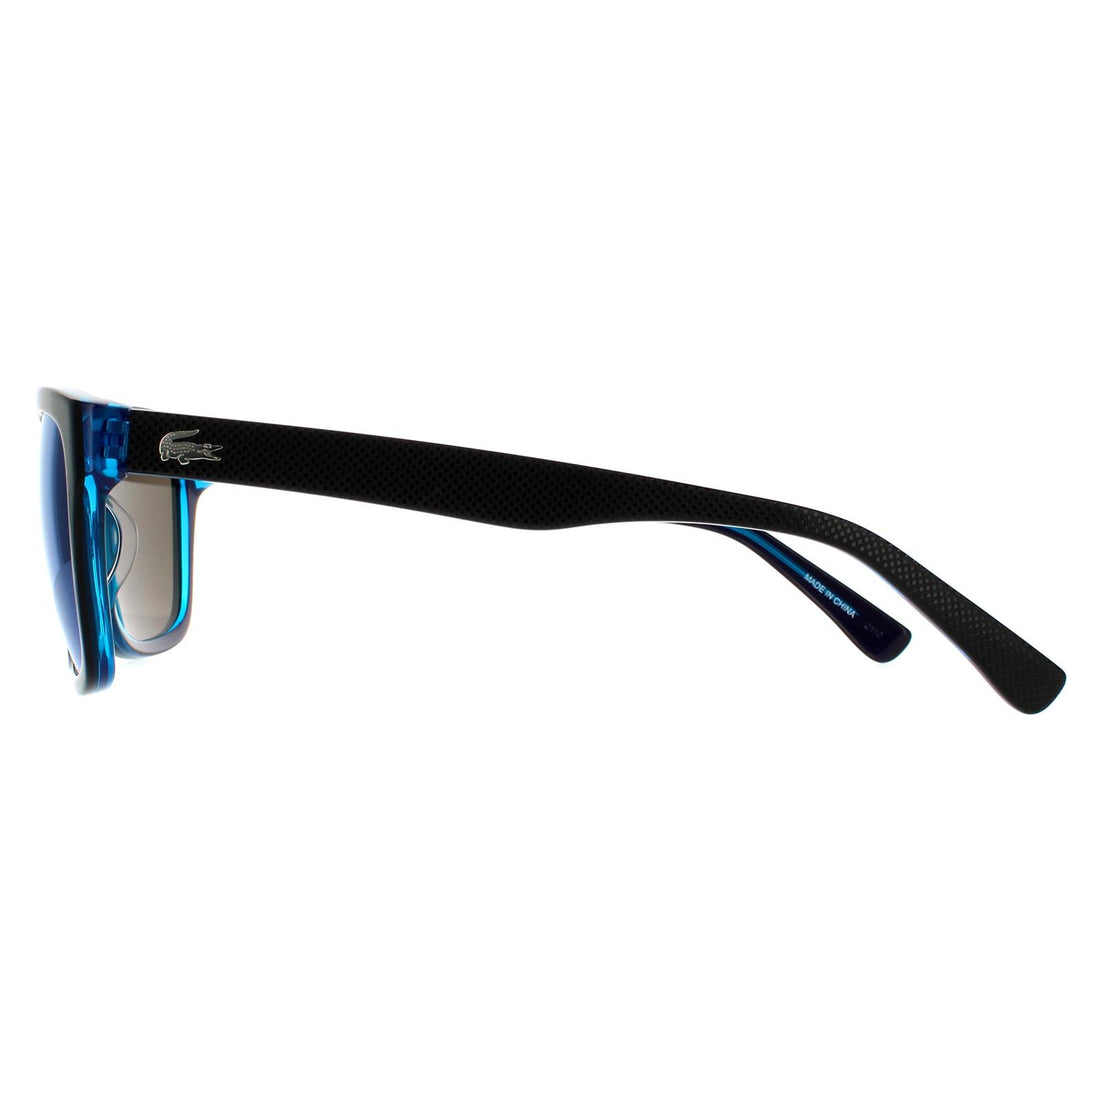 Lacoste Sunglasses L683S 002 Black Blue